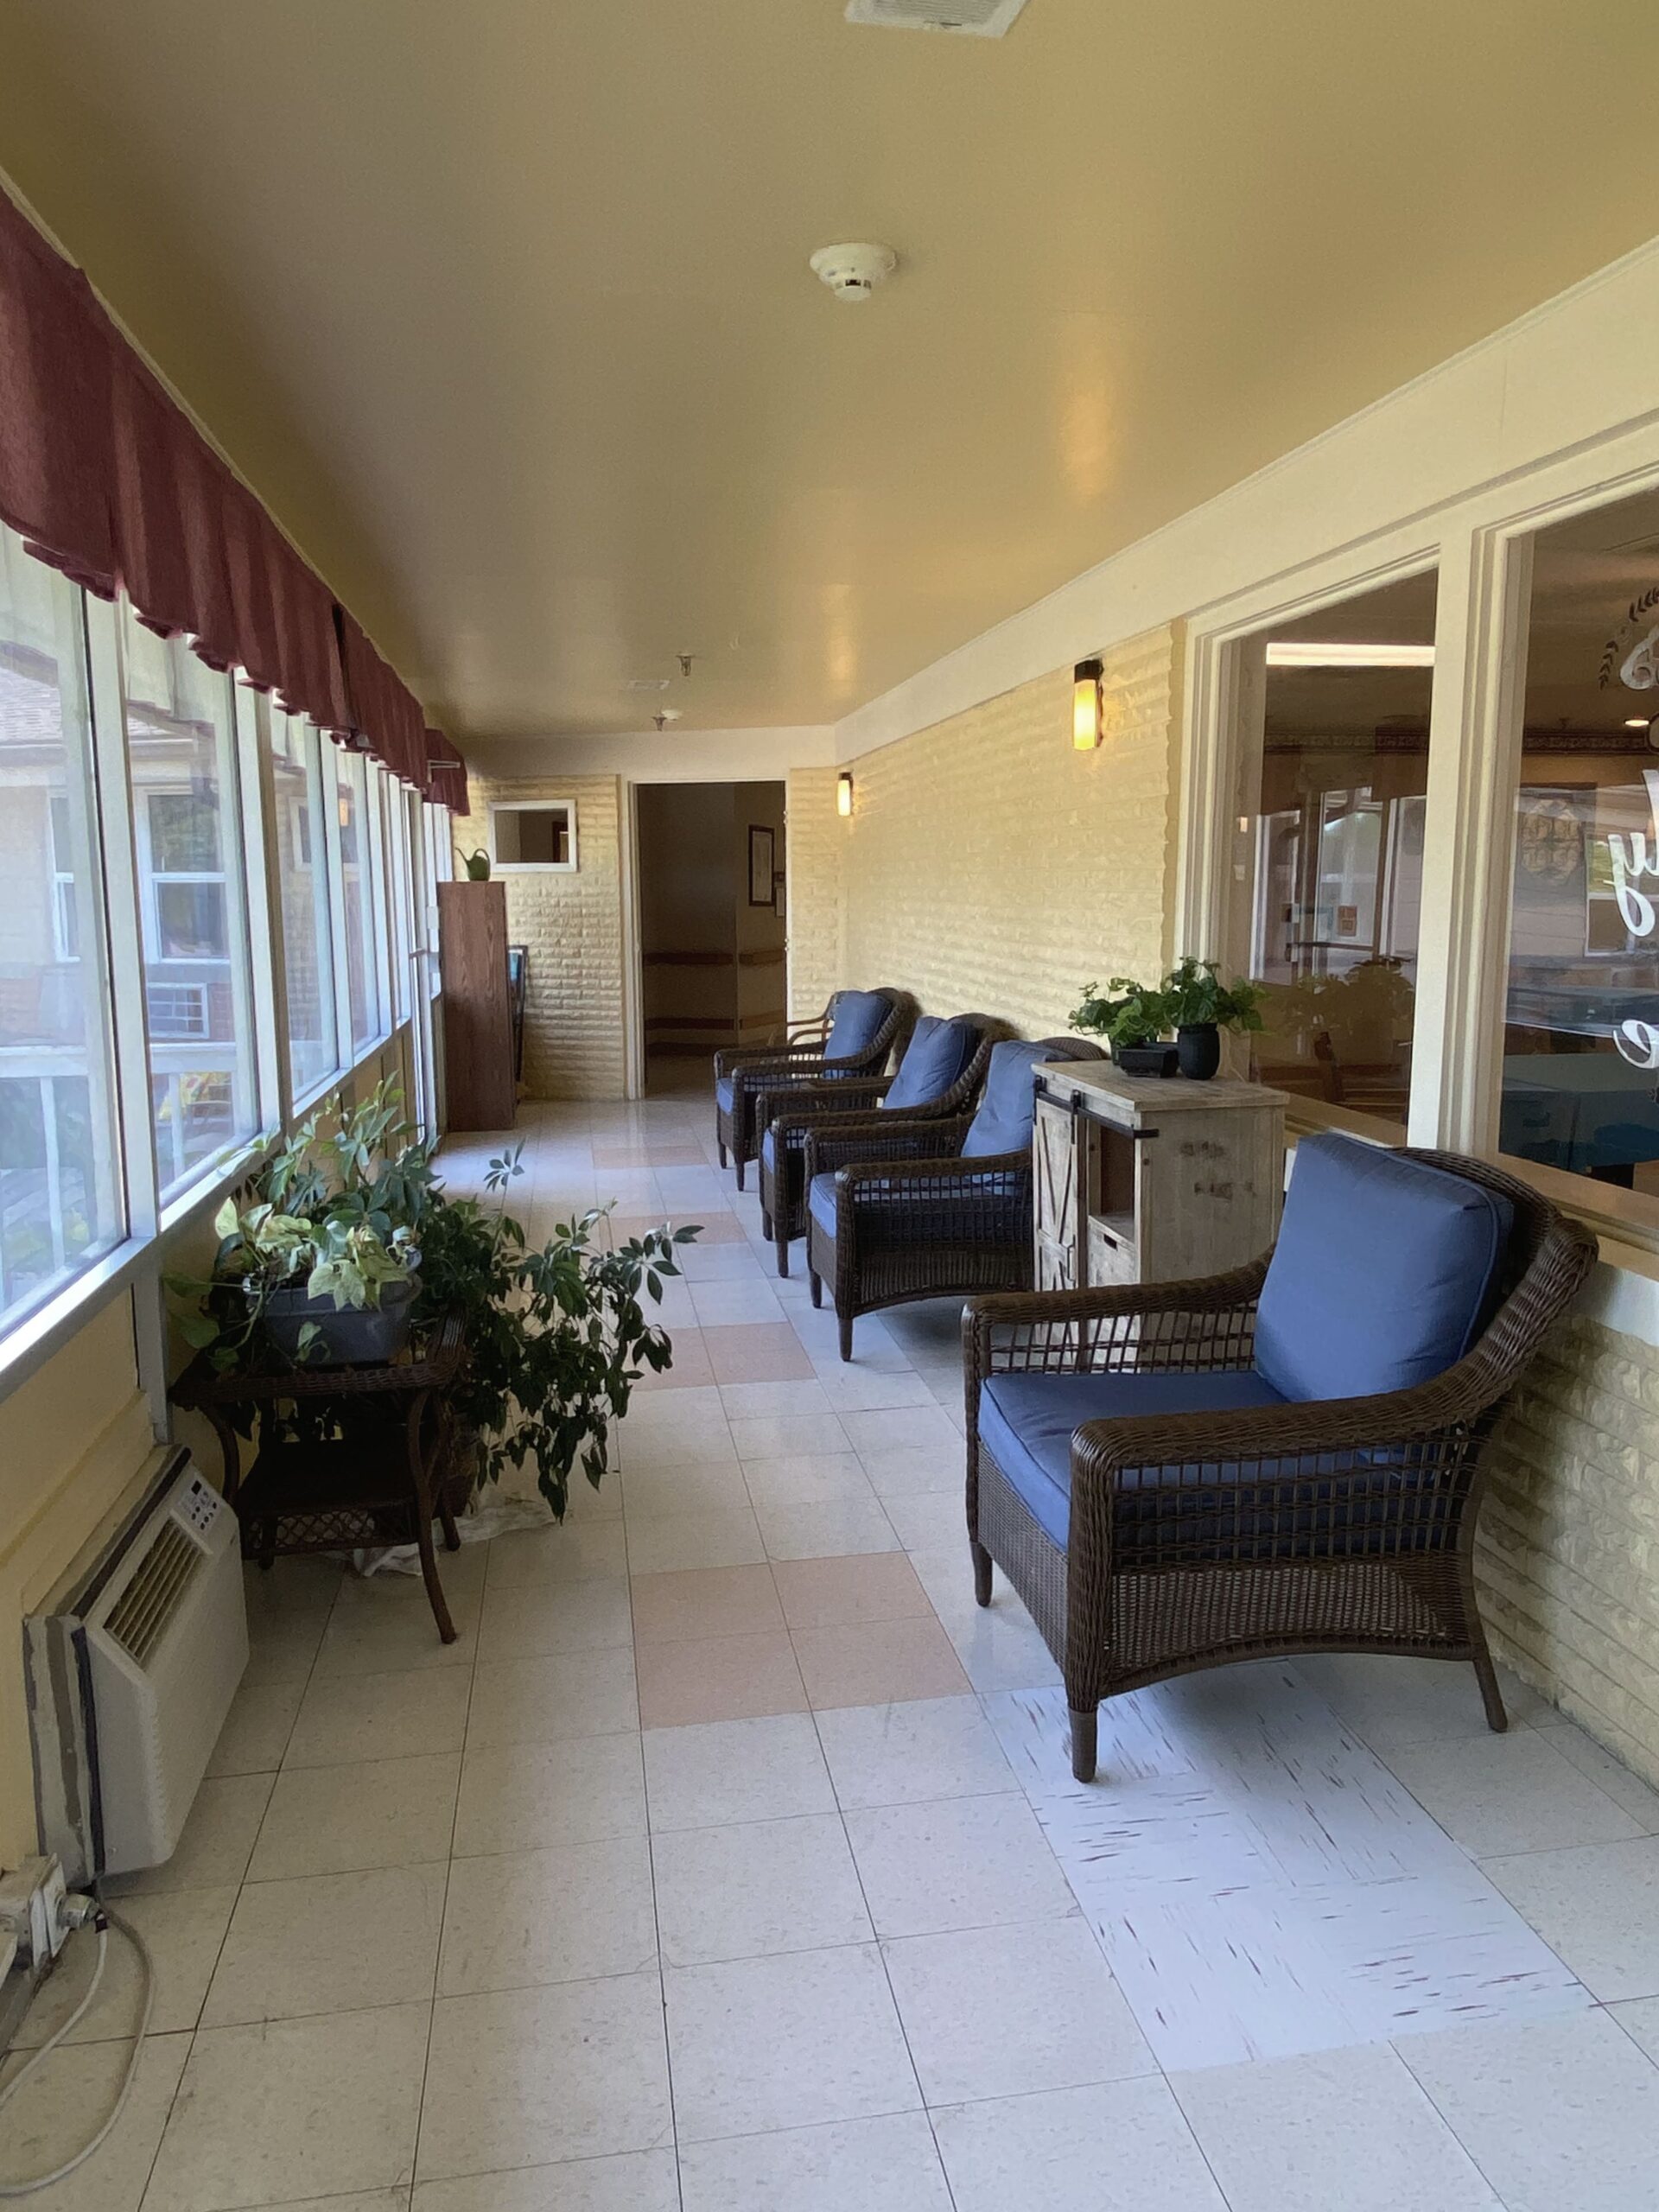 Brickyard Healthcare Lincoln Hills Care Center interior sunroom for residents